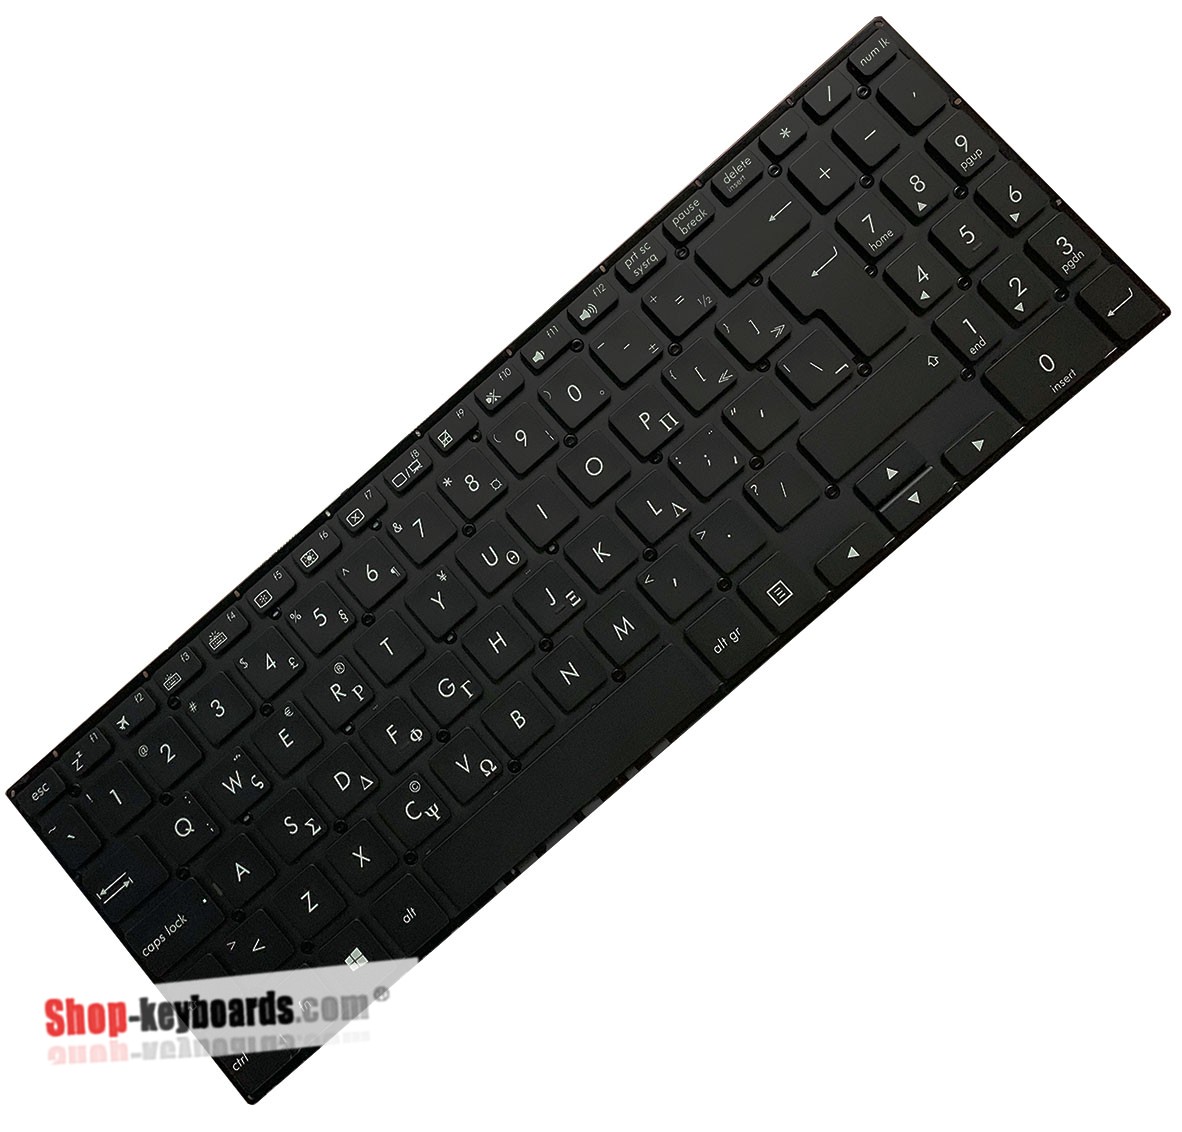 Asus AEBKML00010 Keyboard replacement